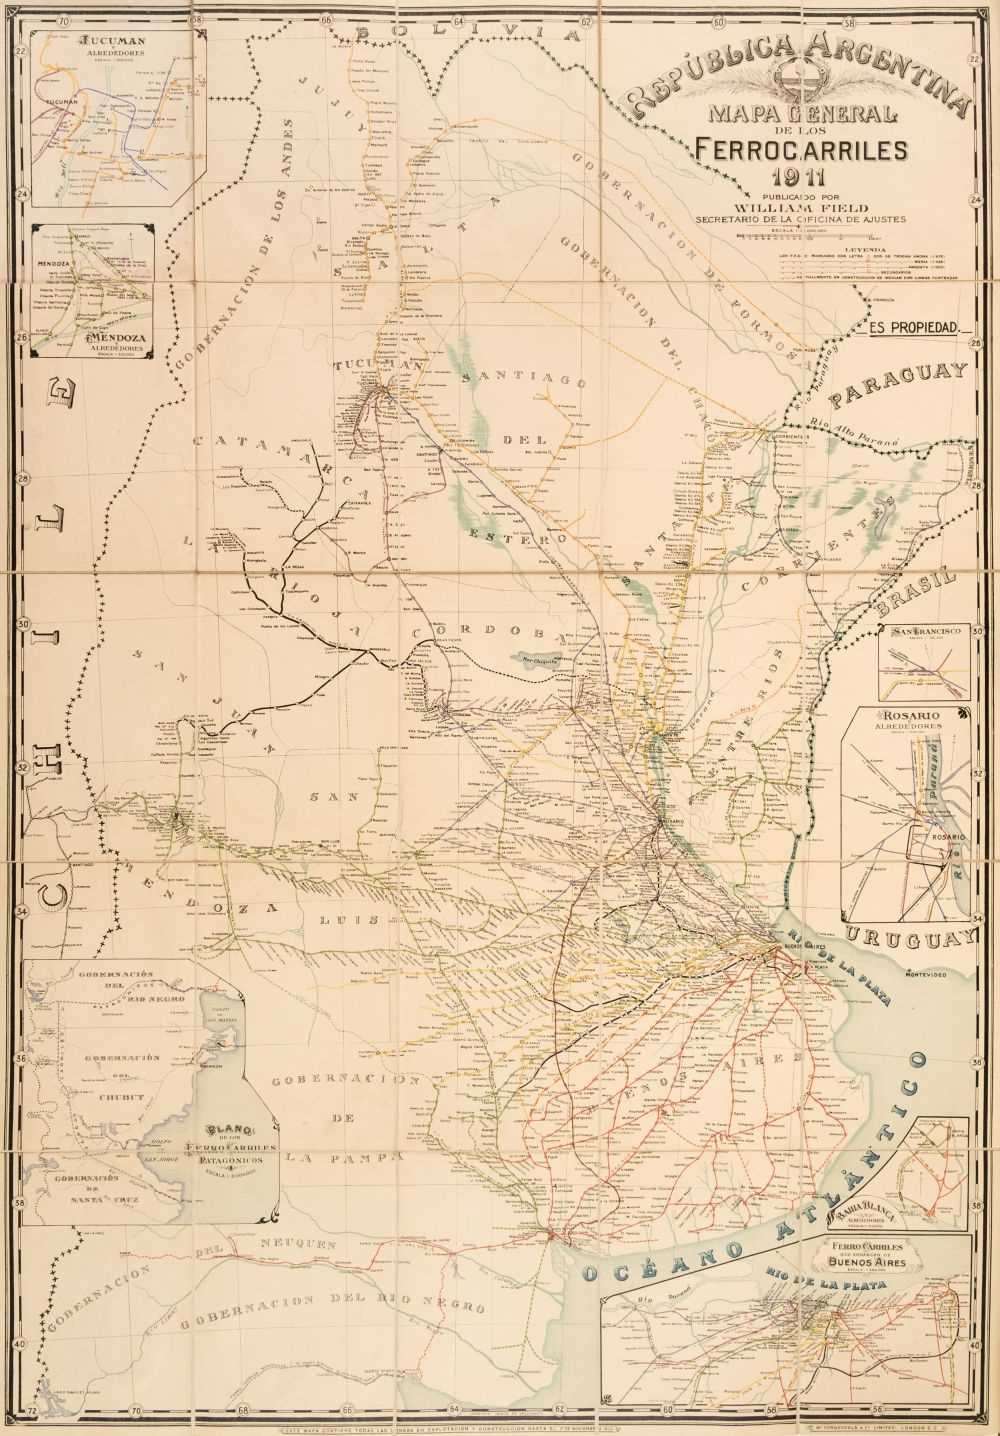 Lot 76 - Argentina. Field (William, publisher), Republica Argentina Mapa General..., 1911